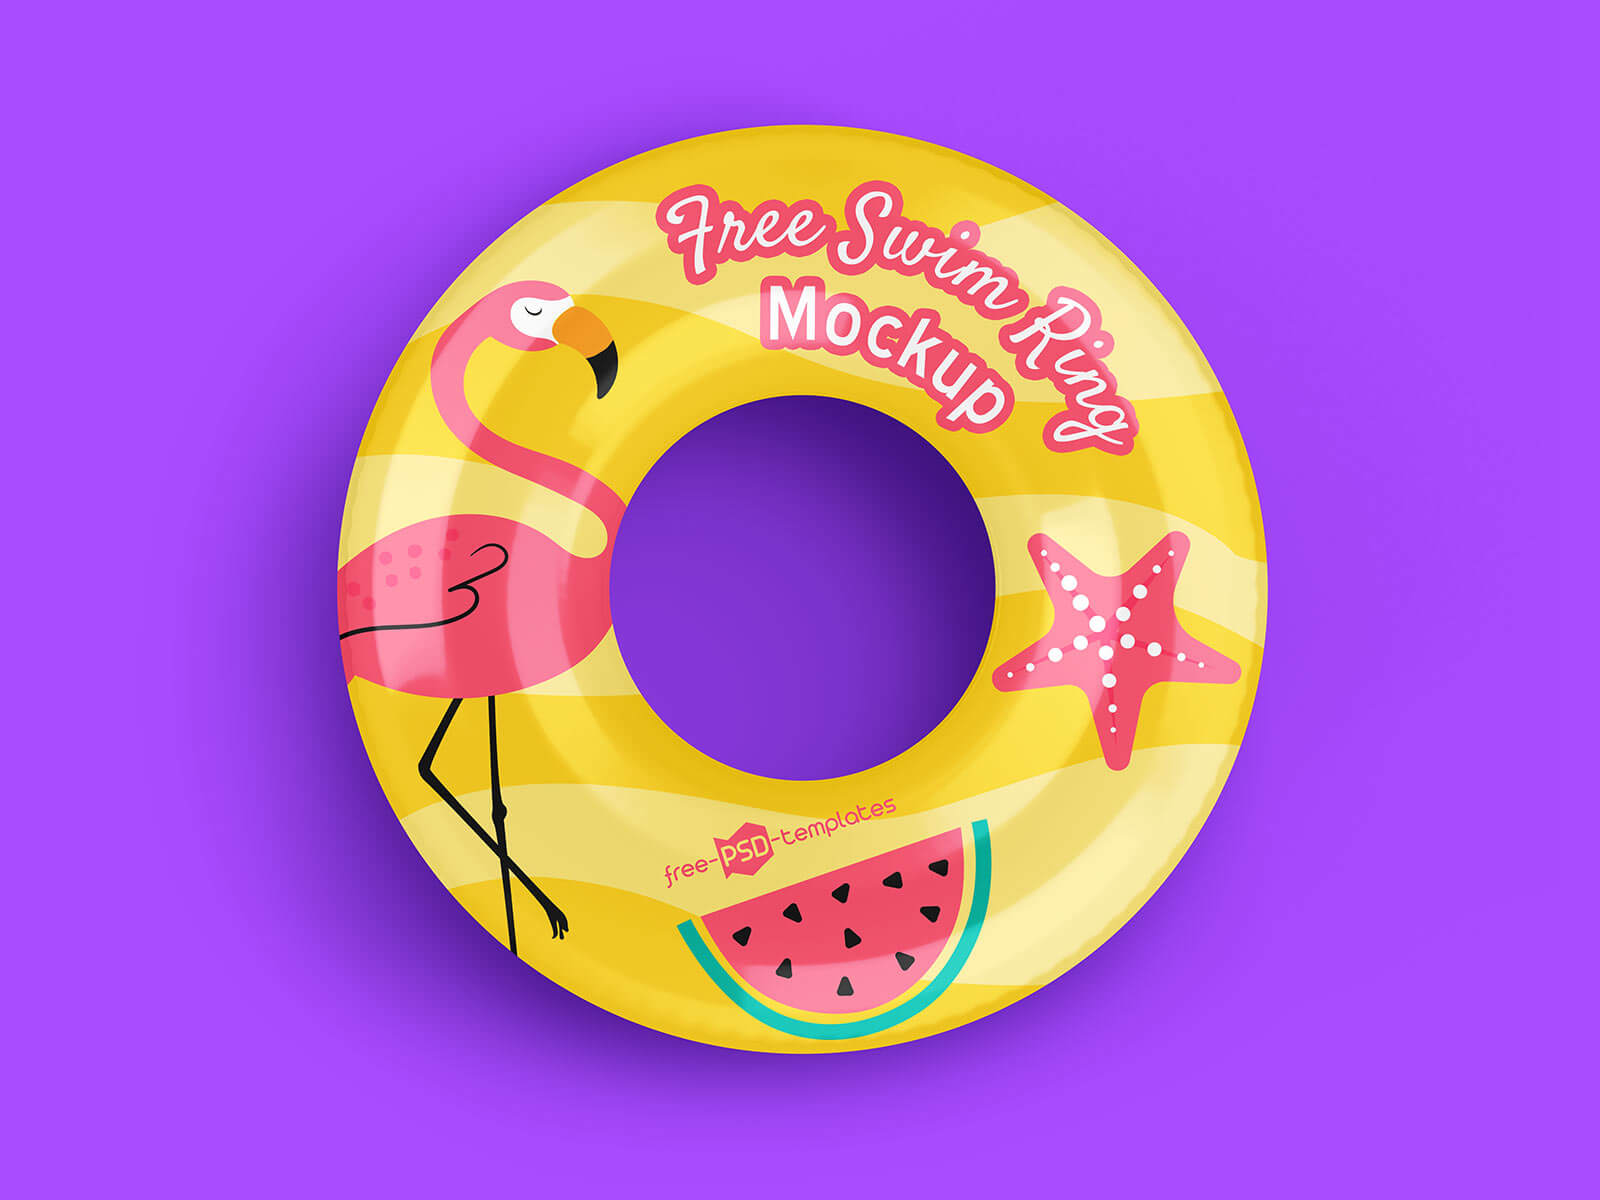 Free Inflatable Children's Swim Ring Mockup PSD Set